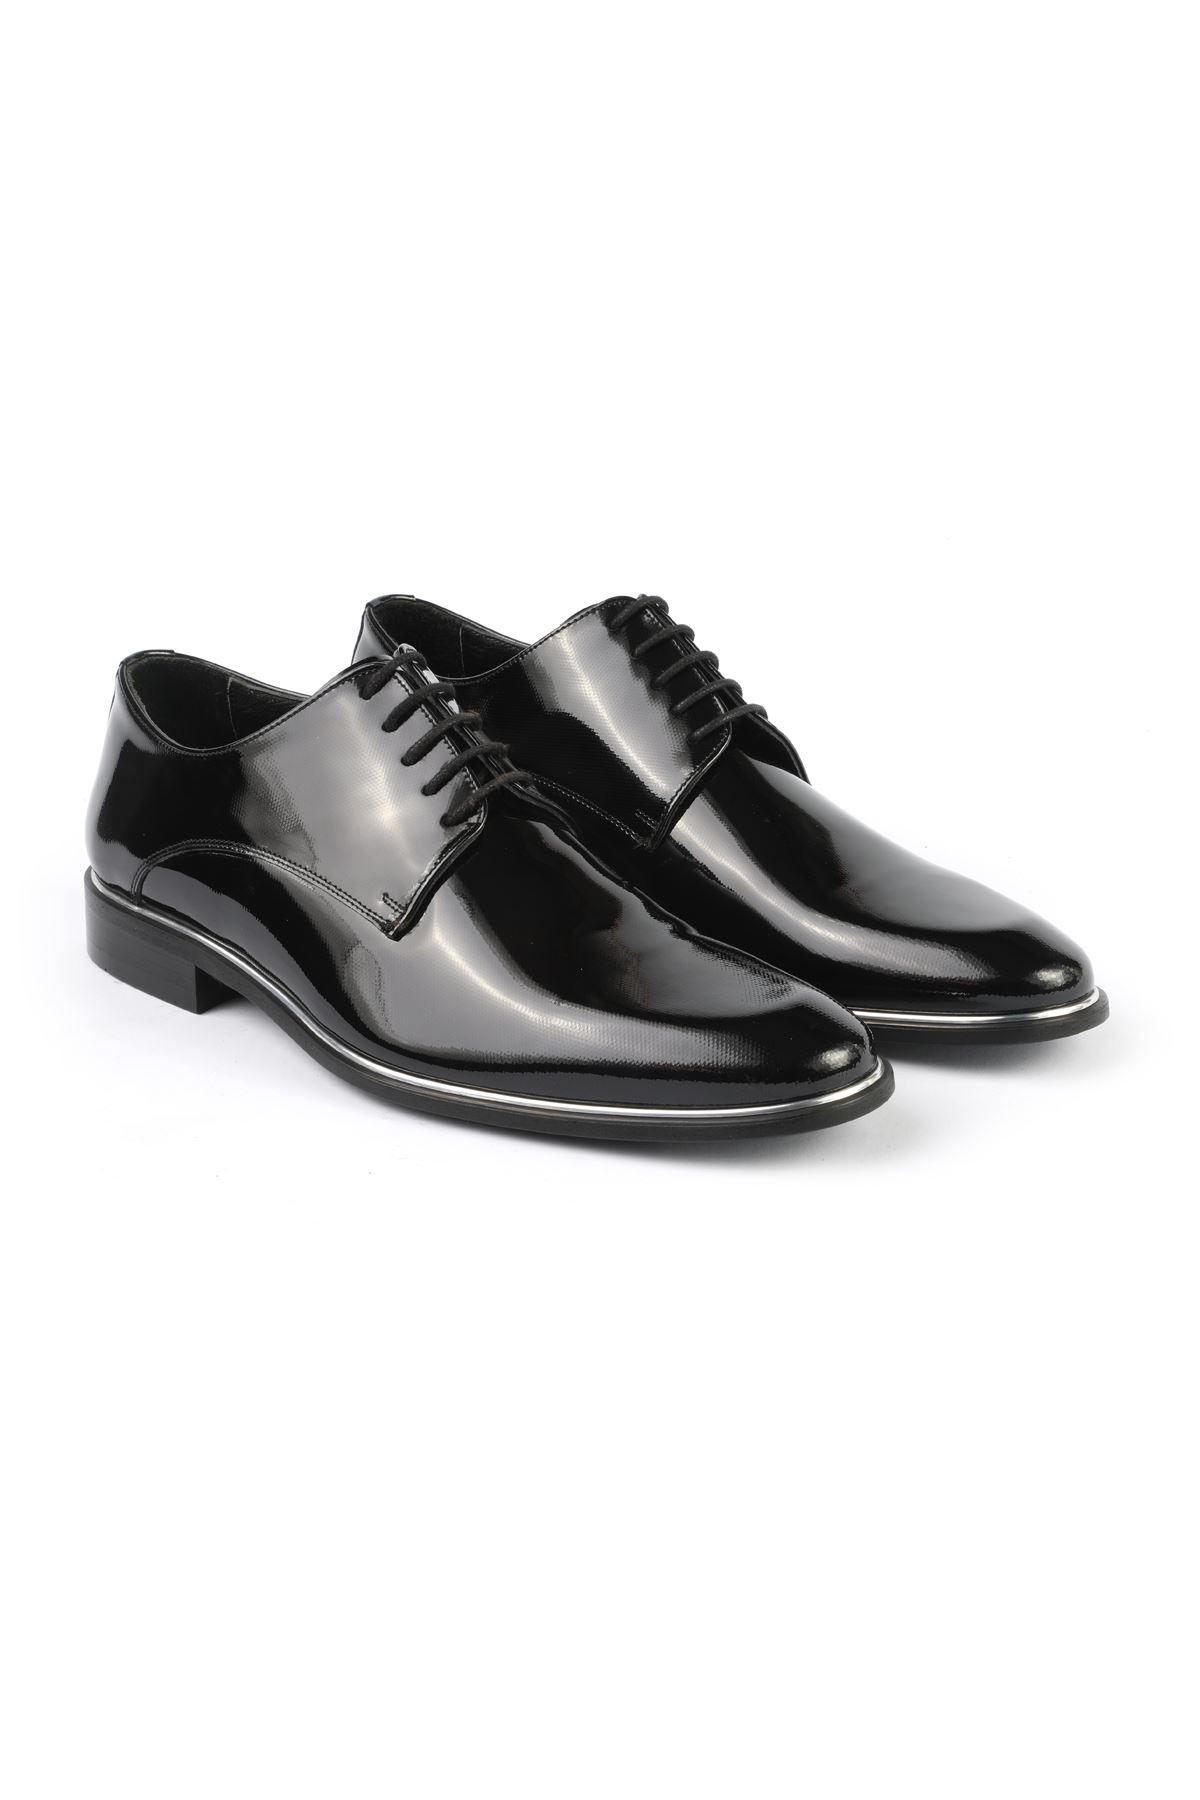 Libero 2140 Black Classic Shoes